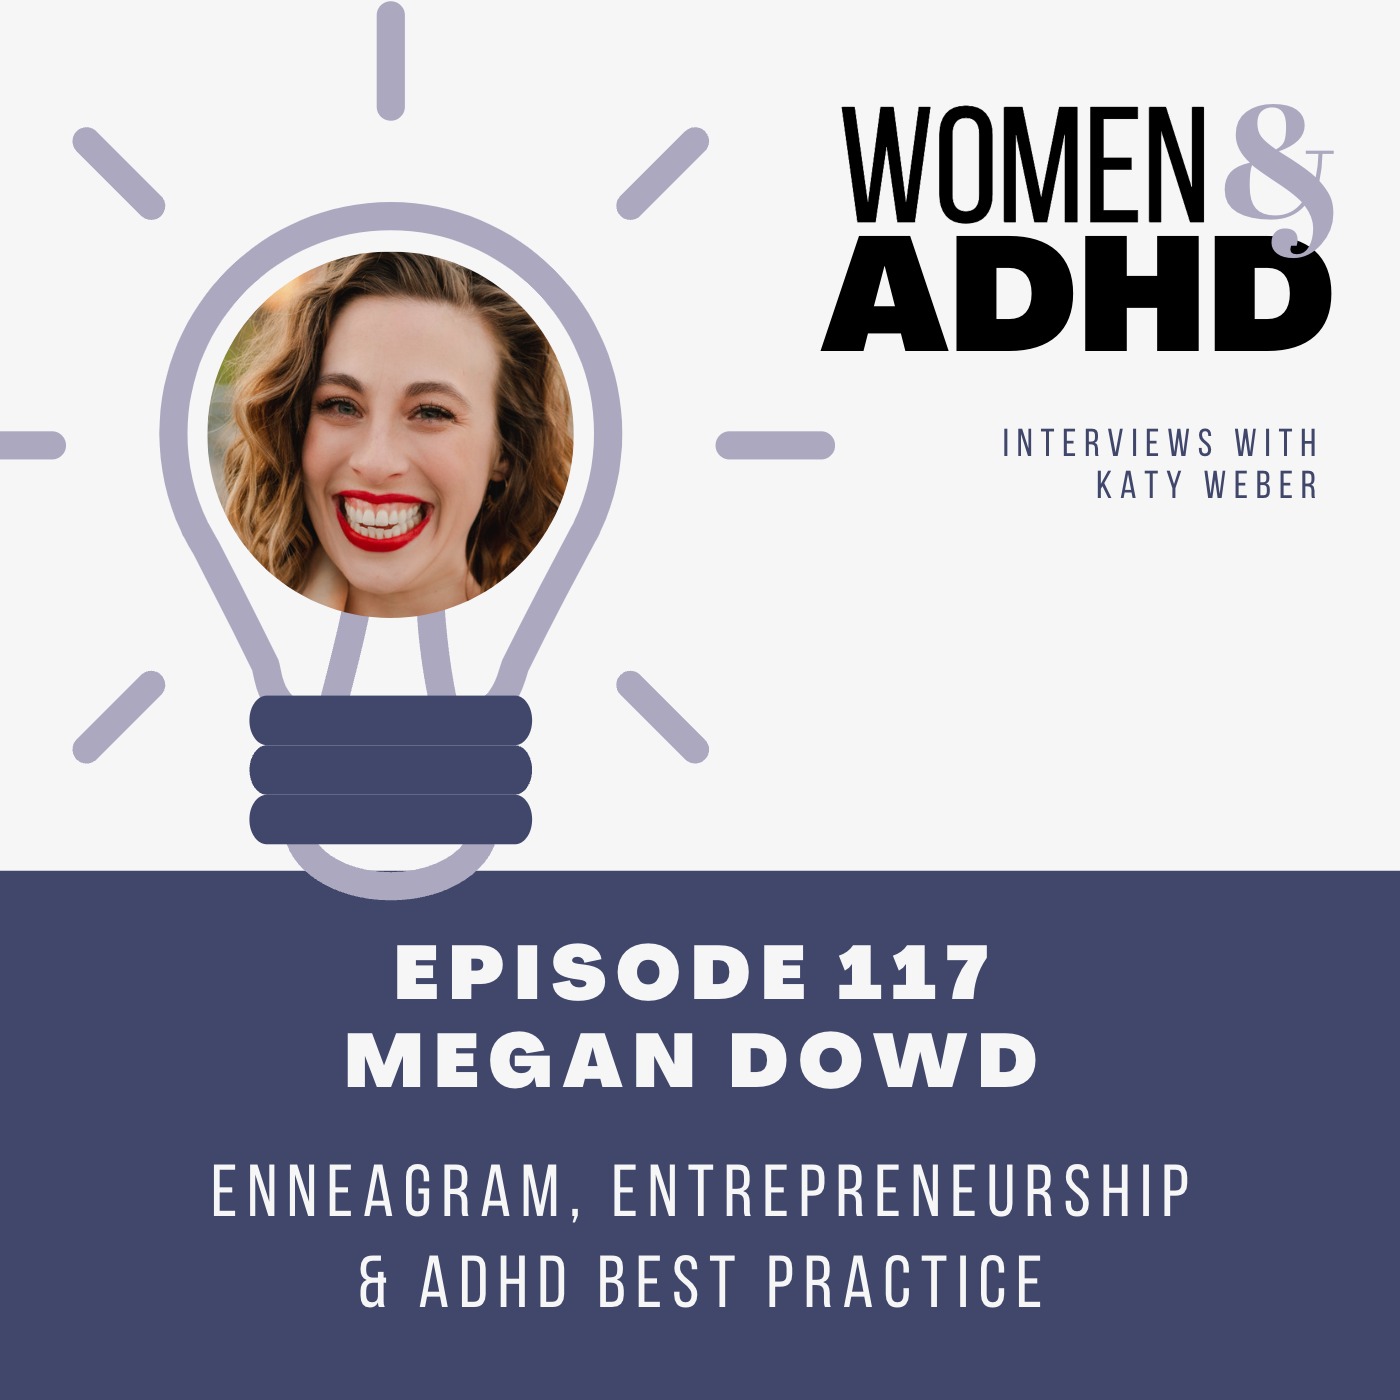 Megan Dowd: Enneagram, entrepreneurship, and ADHD best practice